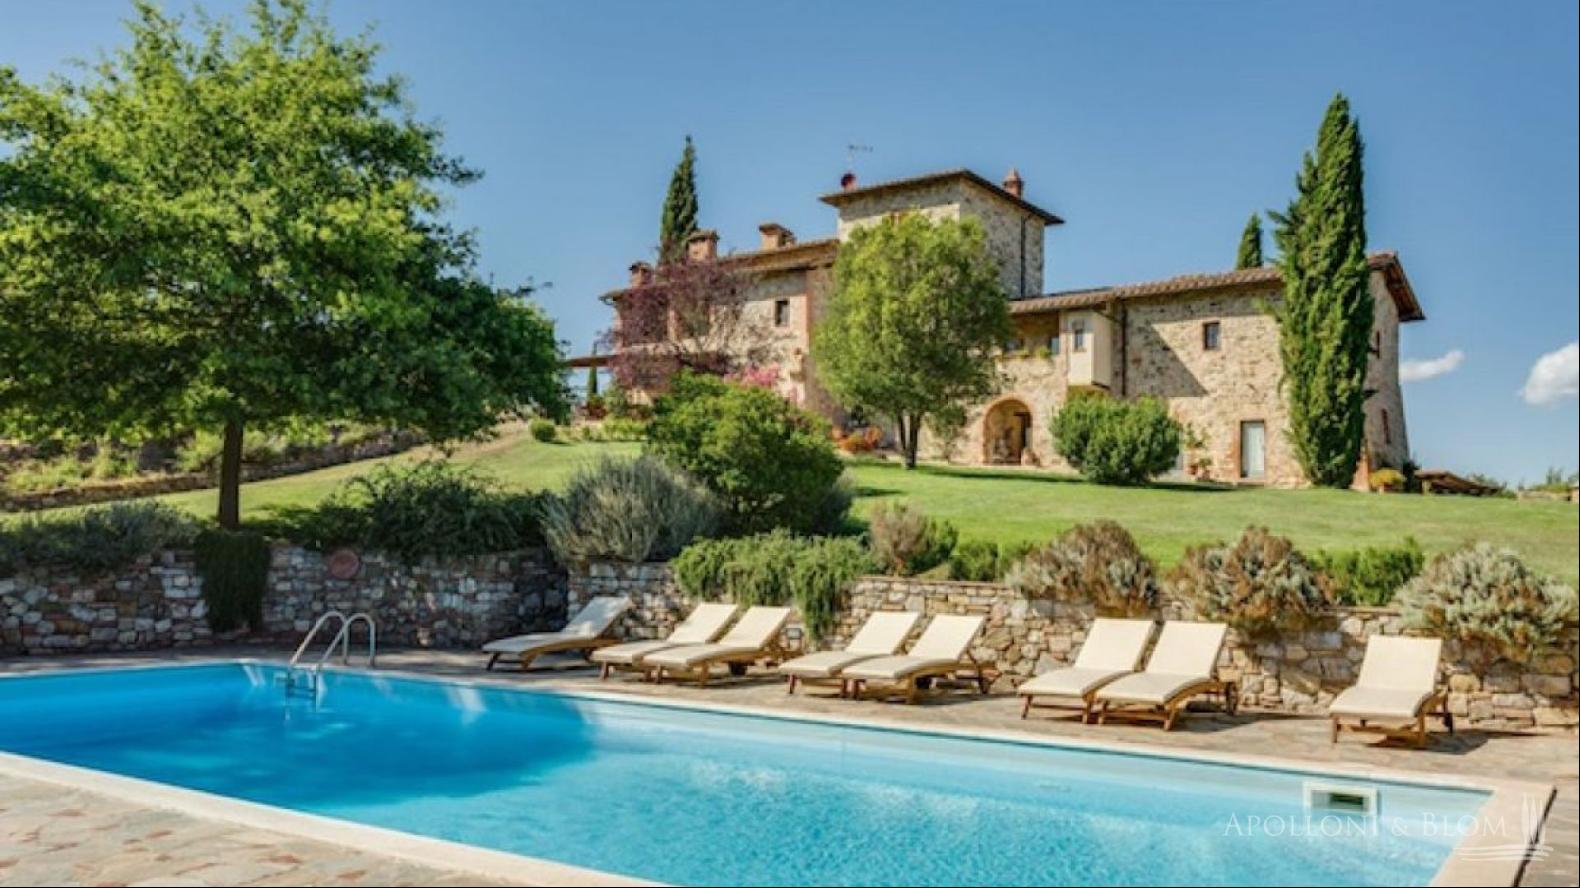 Villa d’Arbia, Chianti Castelnuovo Berardenga - Toscana